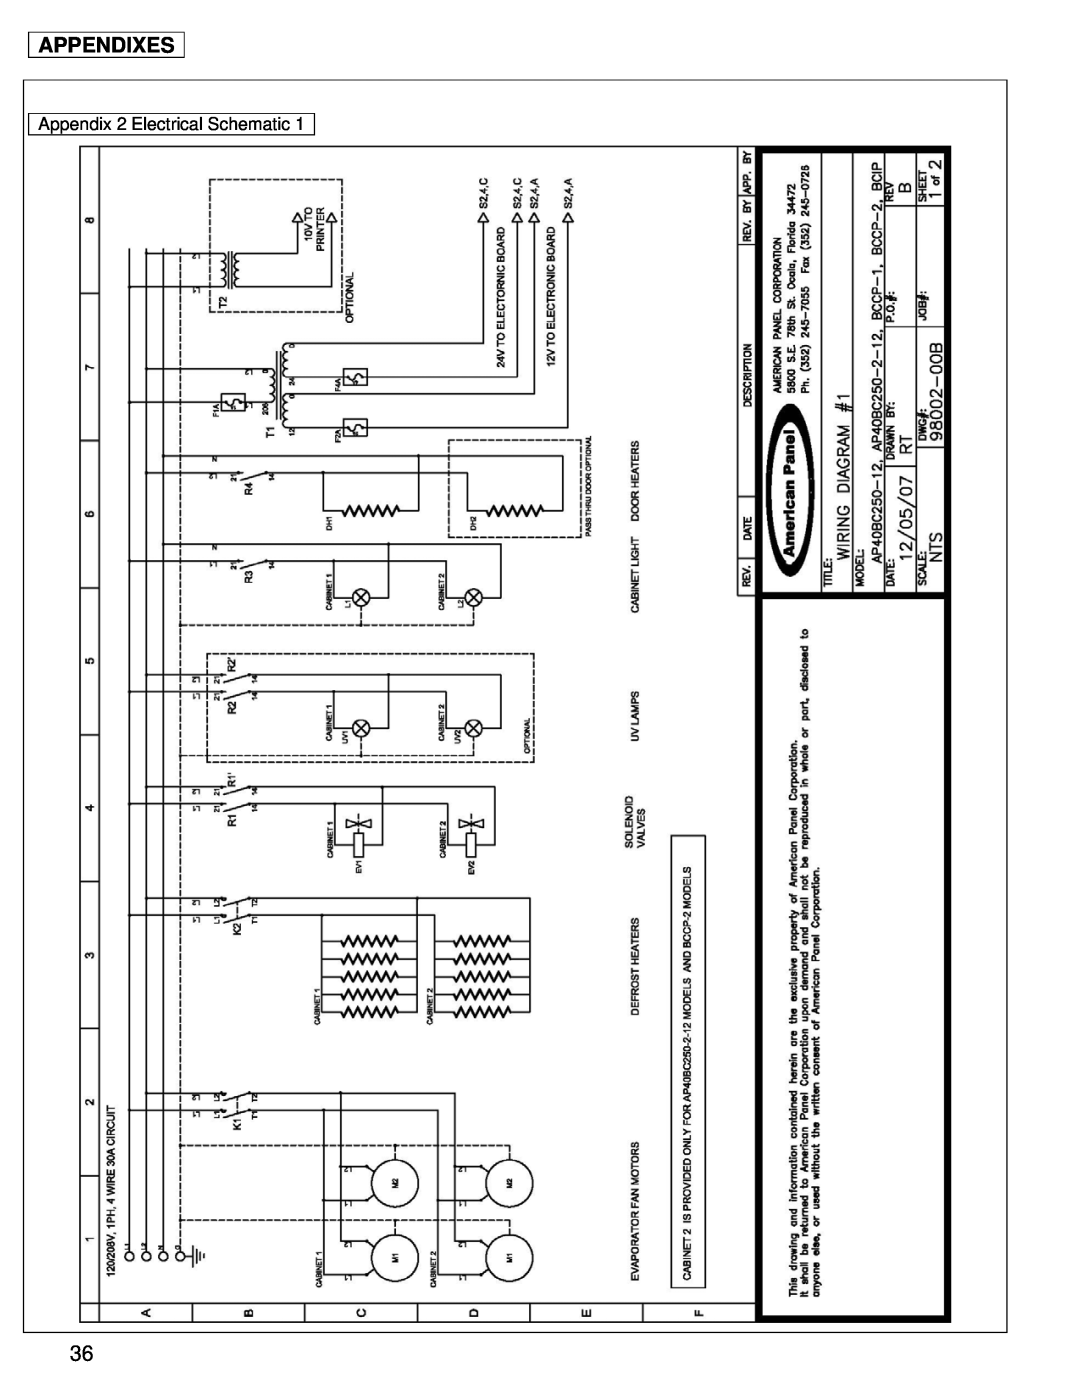 American Panel AP40BC250-2-12, BCCP-1, BCIP, BCCP-2, AP40BC250-12 manual Appendixes, Appendix 2 Electrical Schematic 